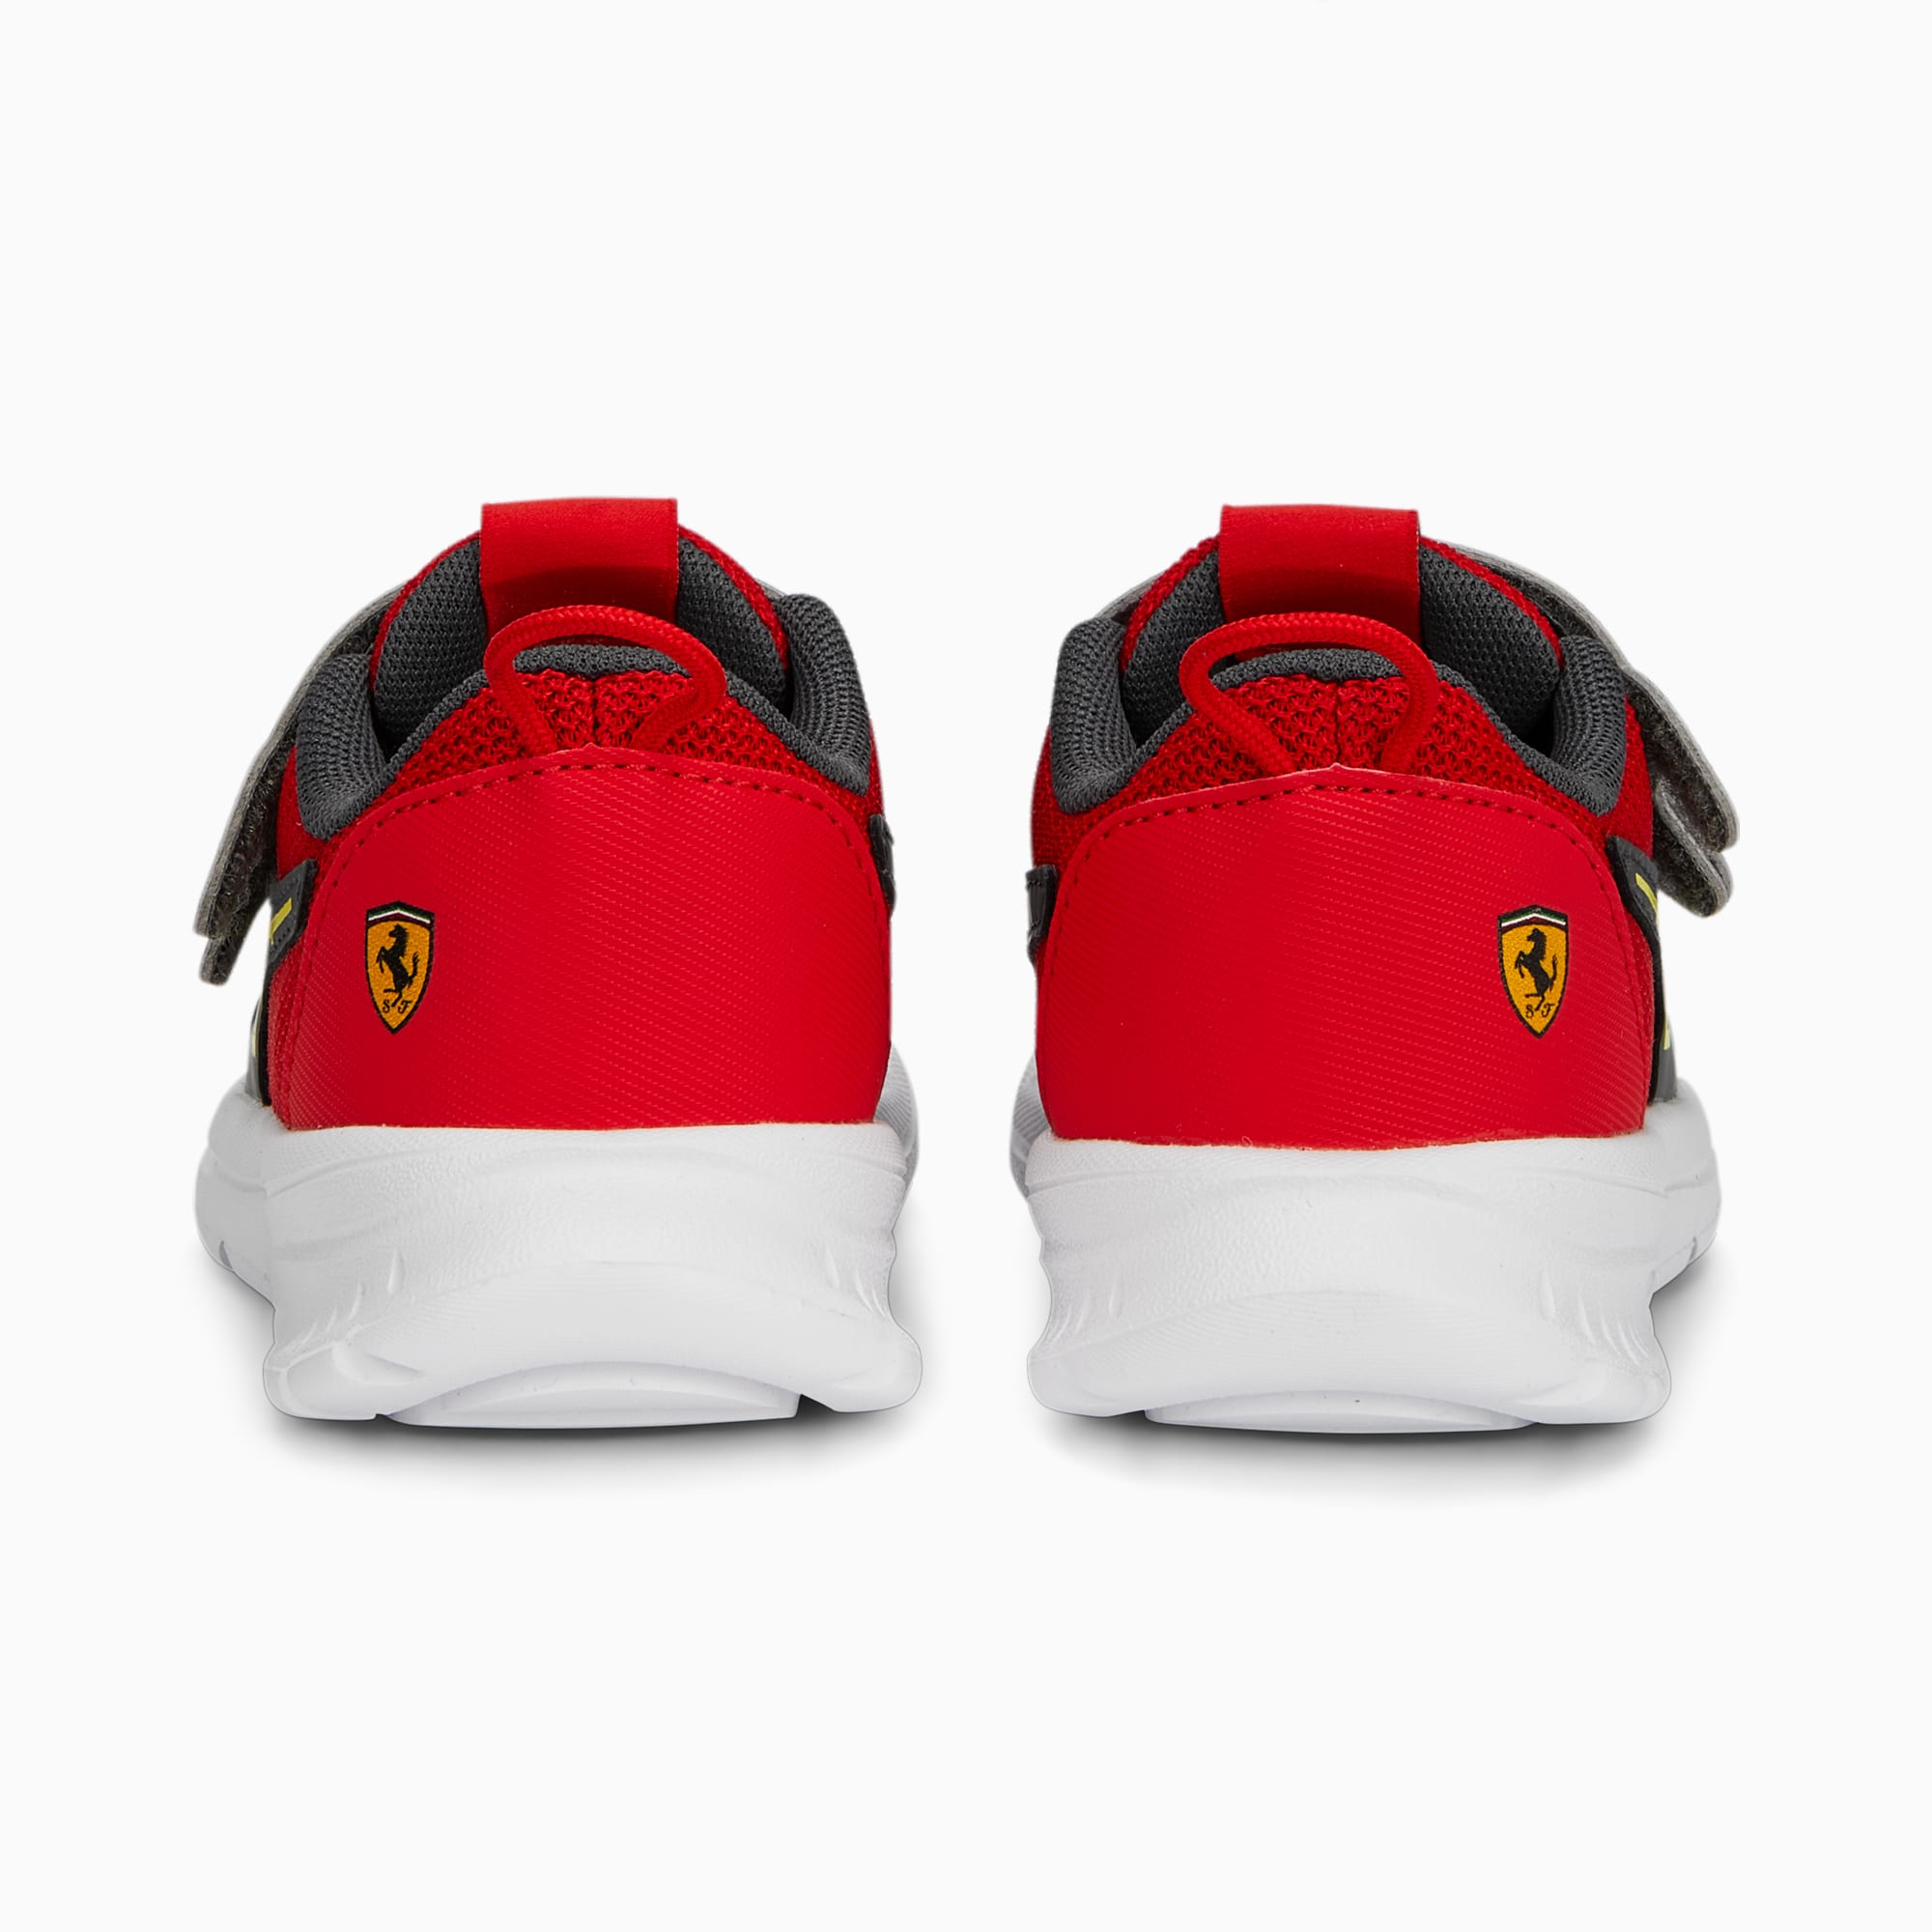 PUMA Scuderia Ferrari Evolve Ptc V Motorsport Shoes Babies, Red, Size 19, Shoes